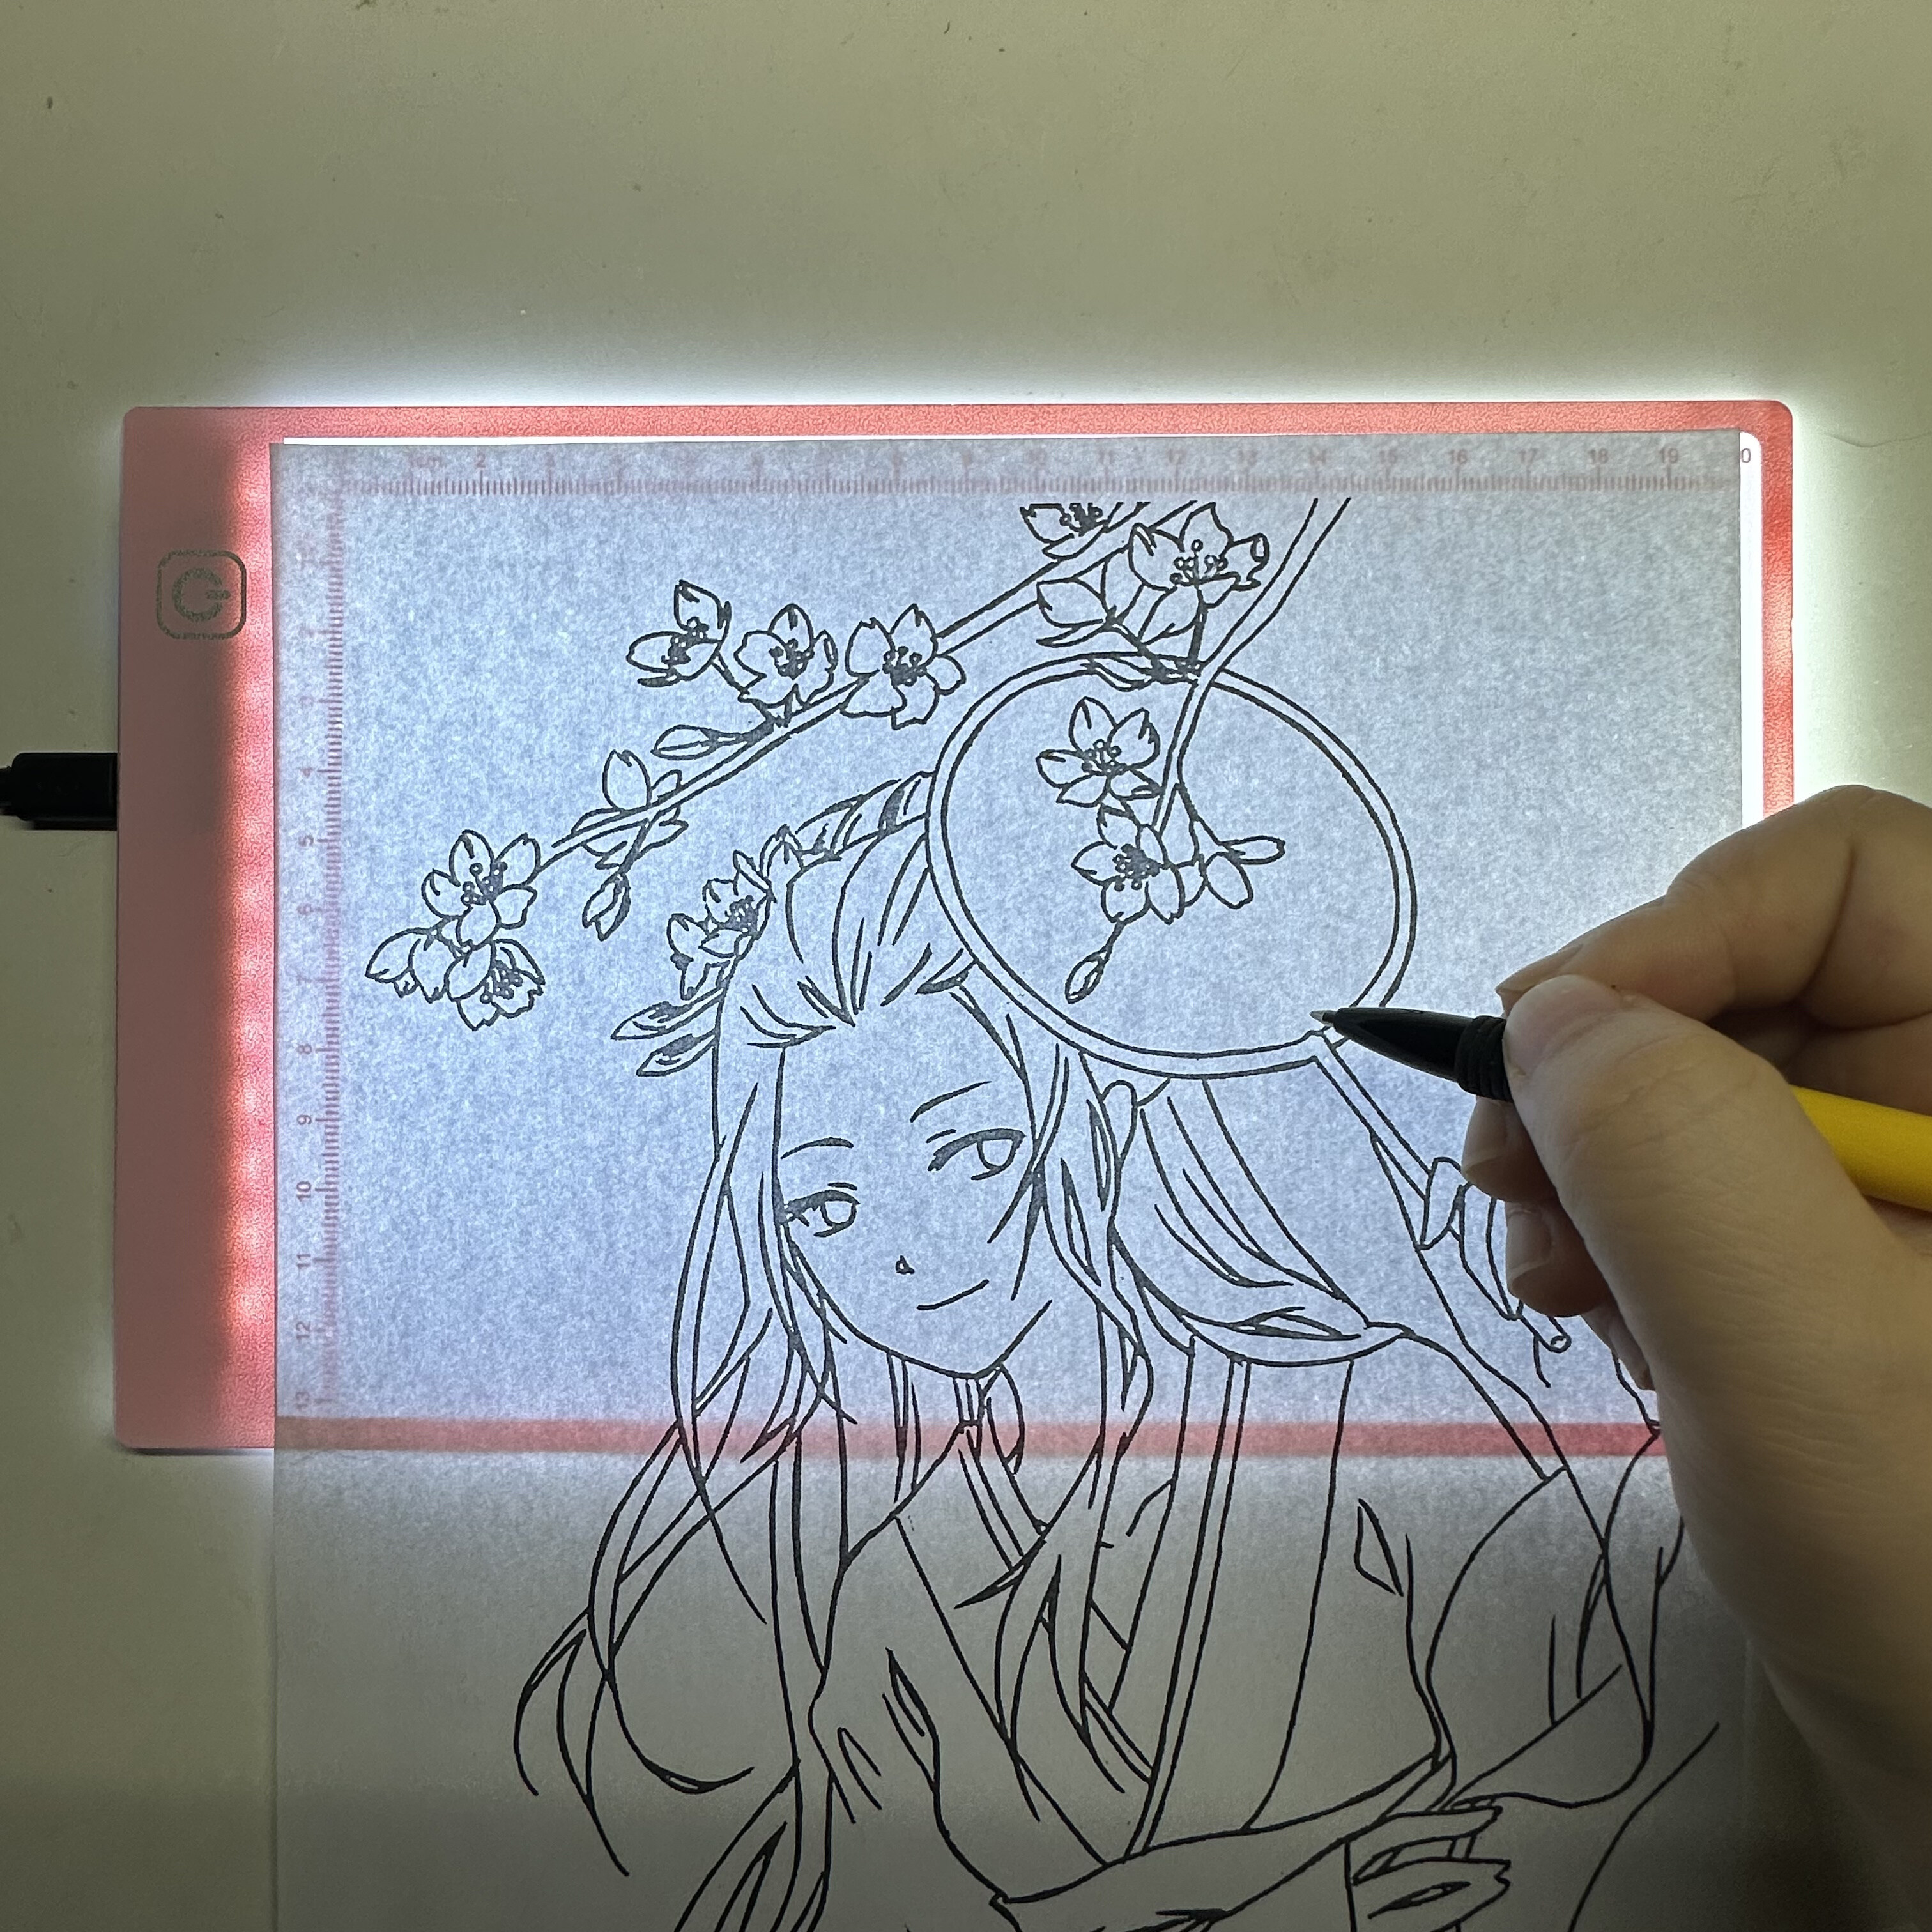 Magic Tracing Light Pad Drawing Light Box for Sketching - China LED Light  Box, Copy Pad